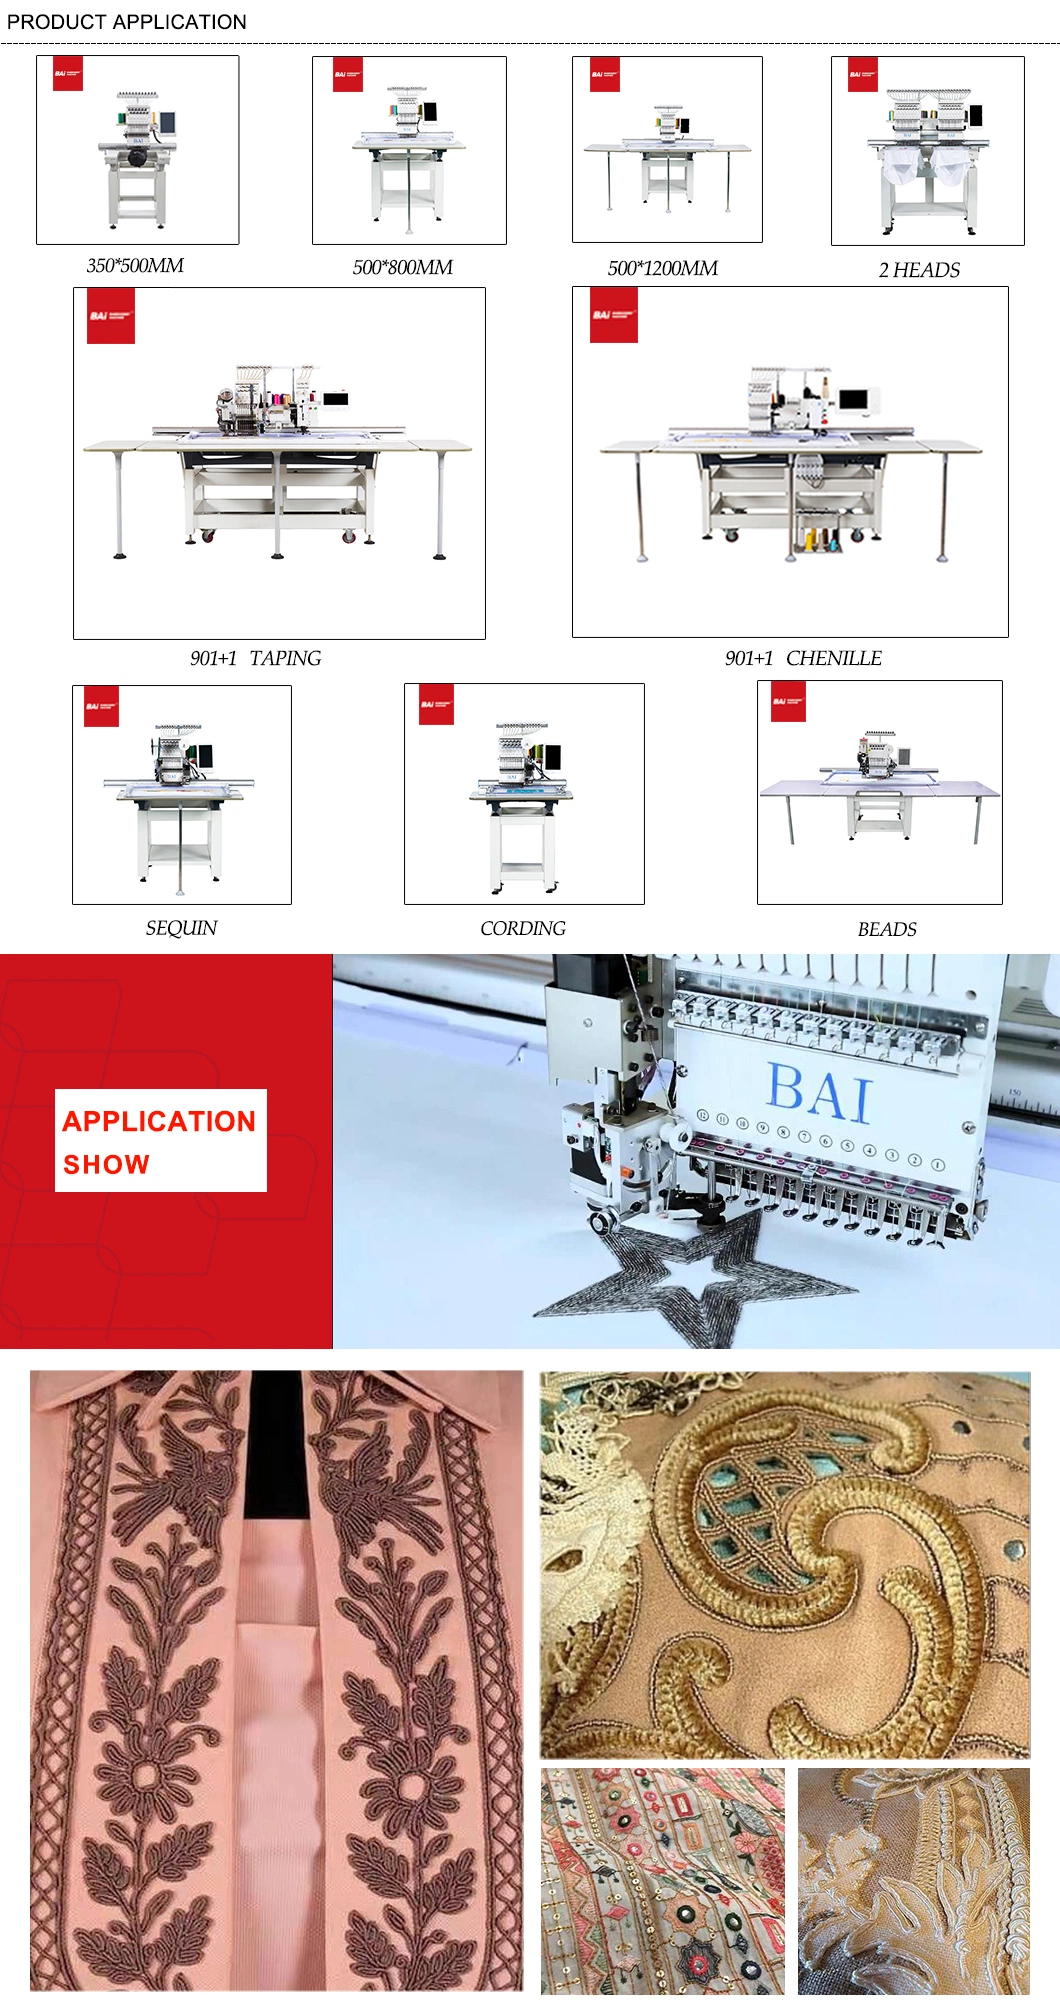 Bai Automatic Computerized Motor-Drivencording Embroidery Machine with Minimalist Embroidery